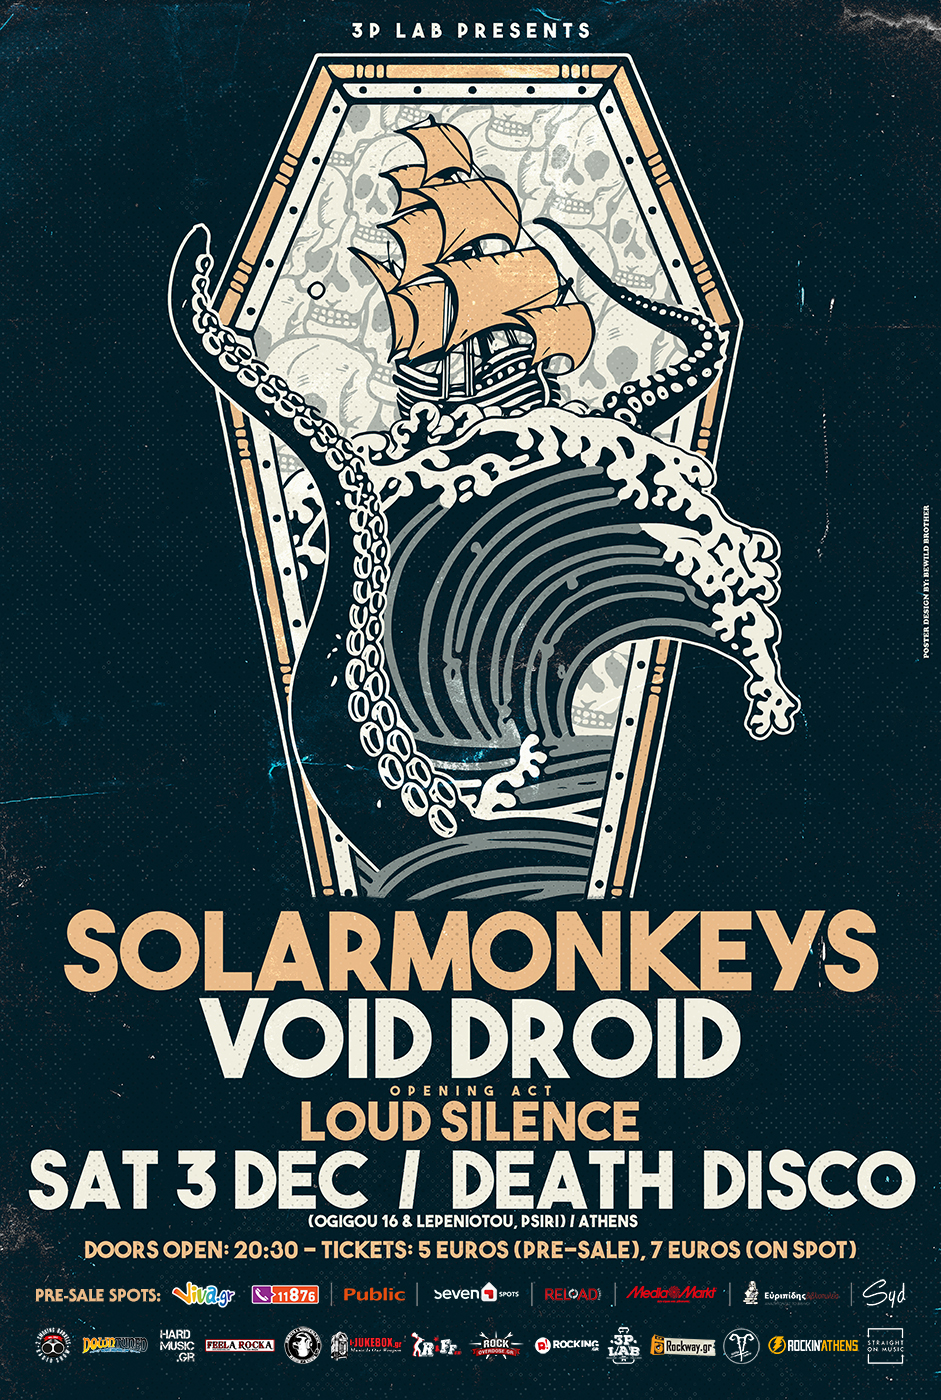 03.12.2016 – Solarmonkeys & Void Droid / Opening act: Loud Silence